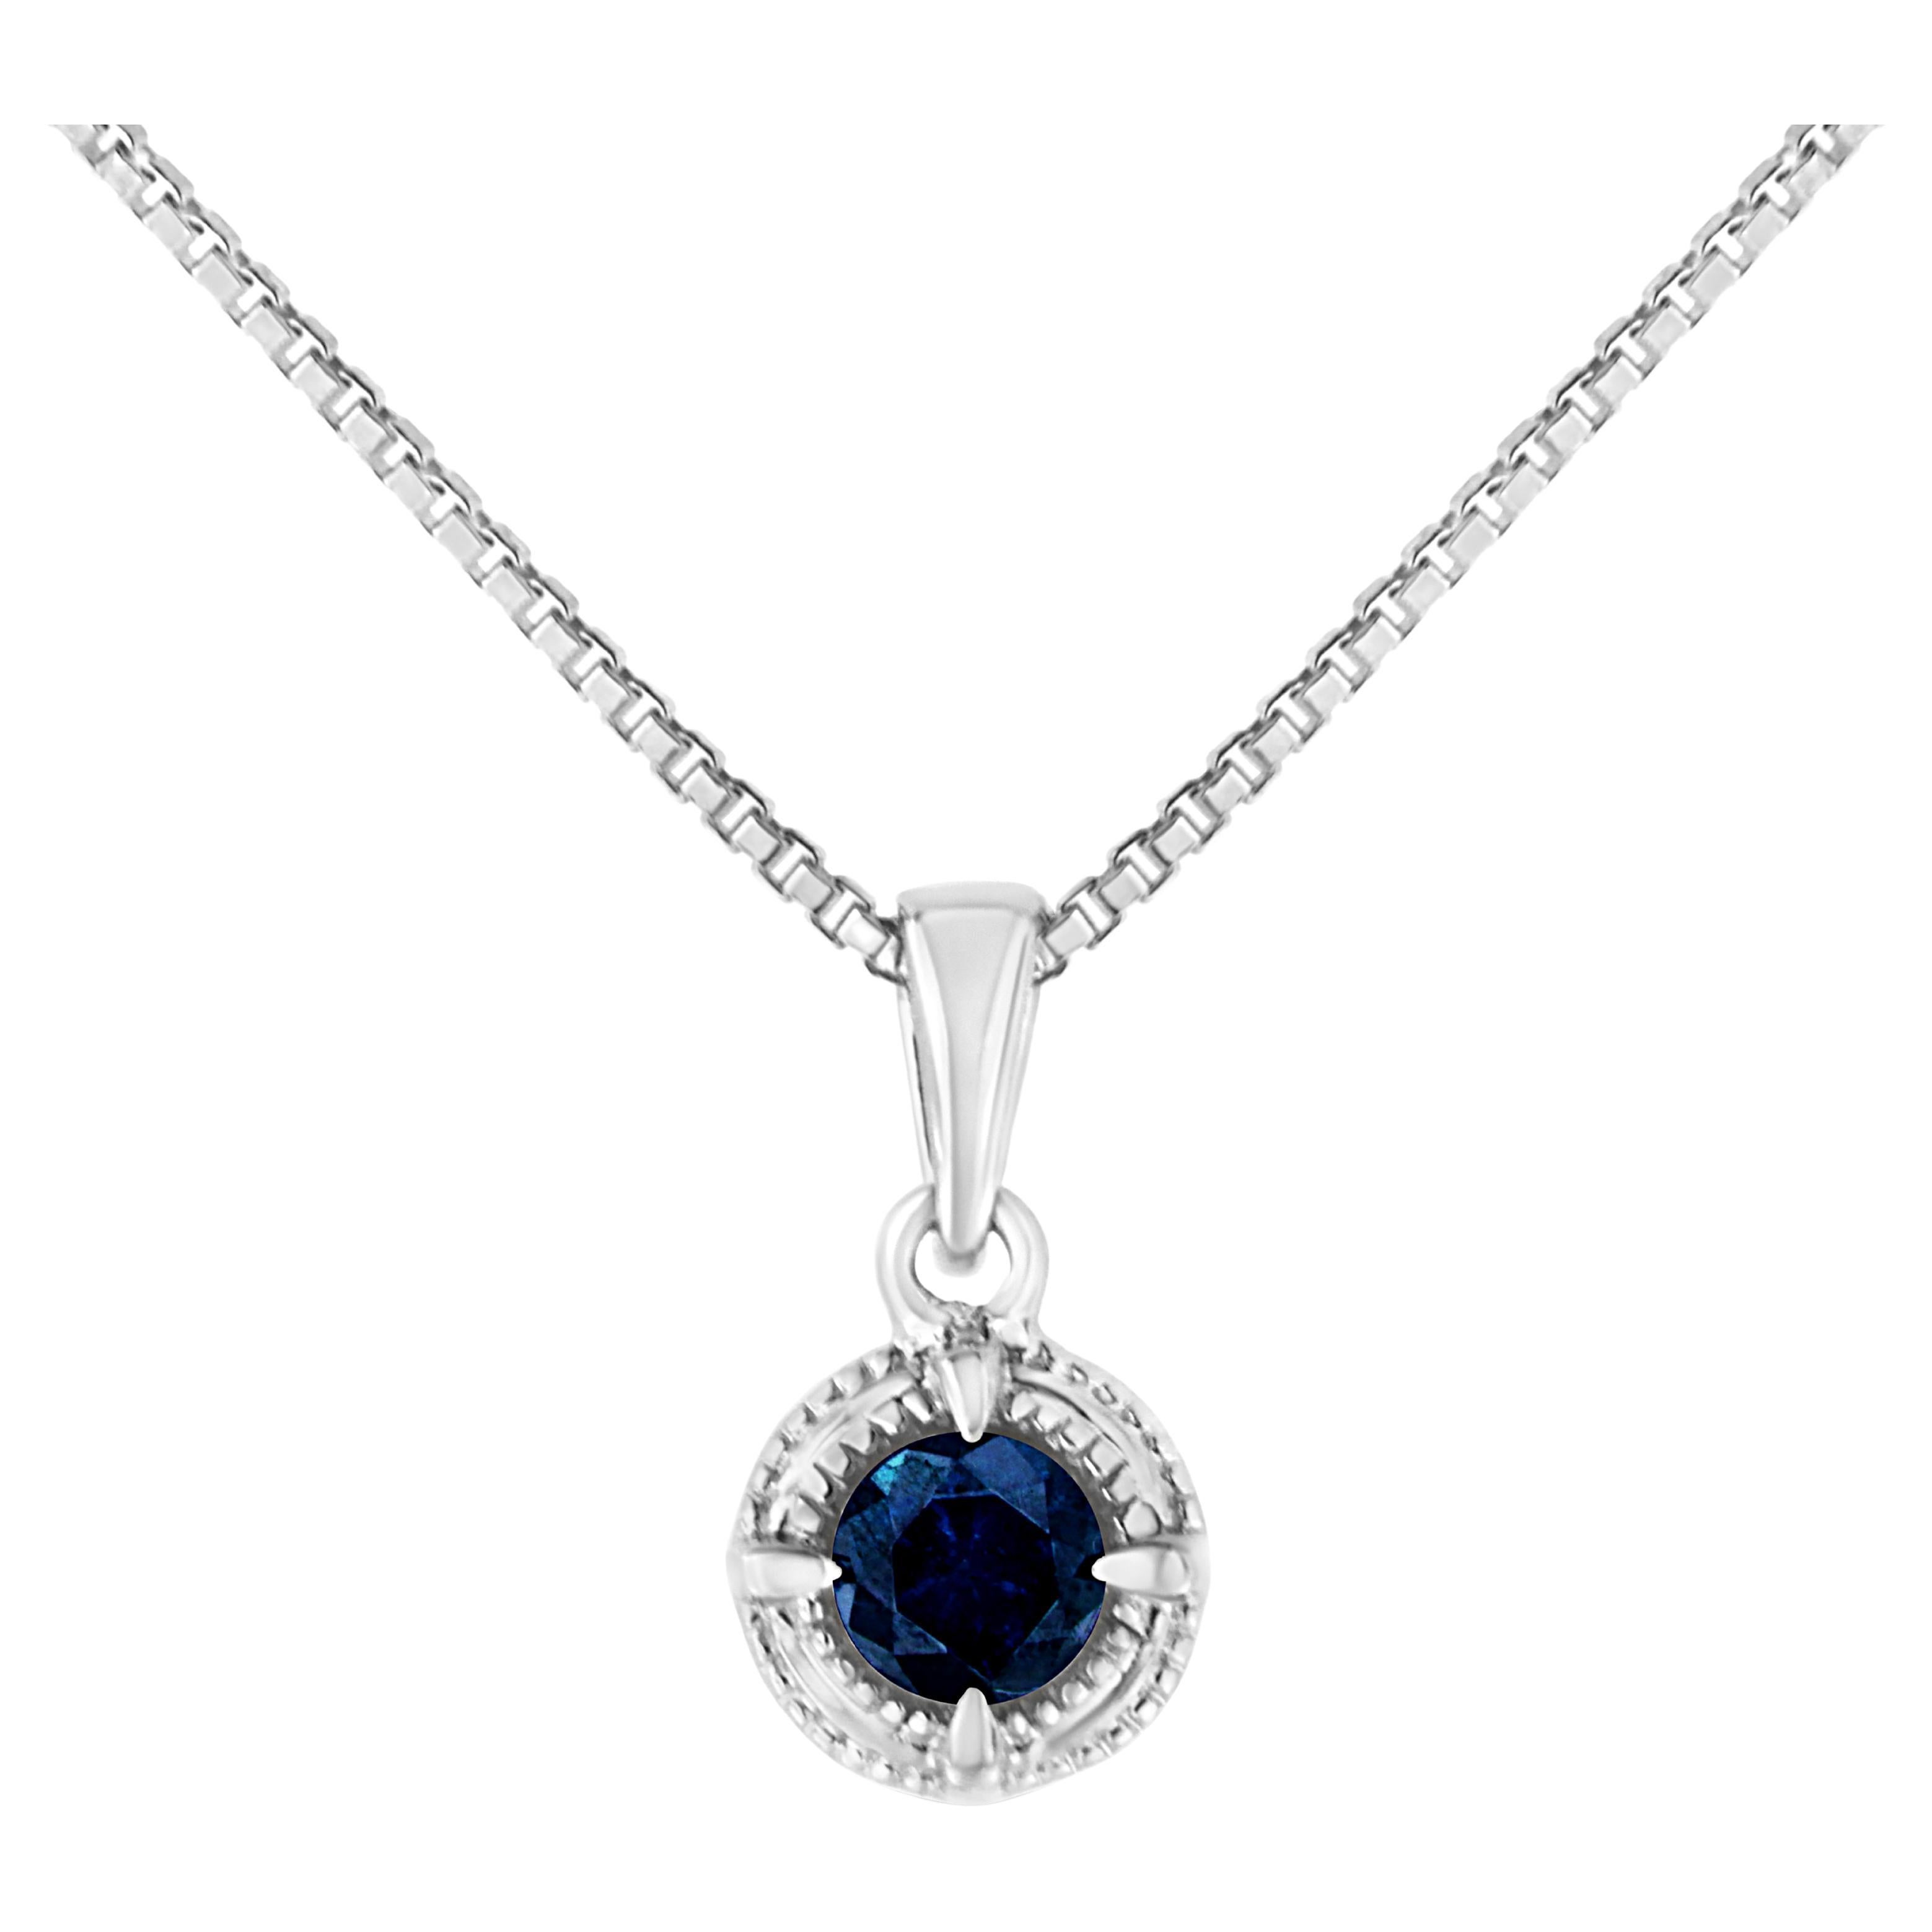 .925 Sterling Silver 3/4 Carat Treated Blue Diamond Milgrain Pendant Necklace